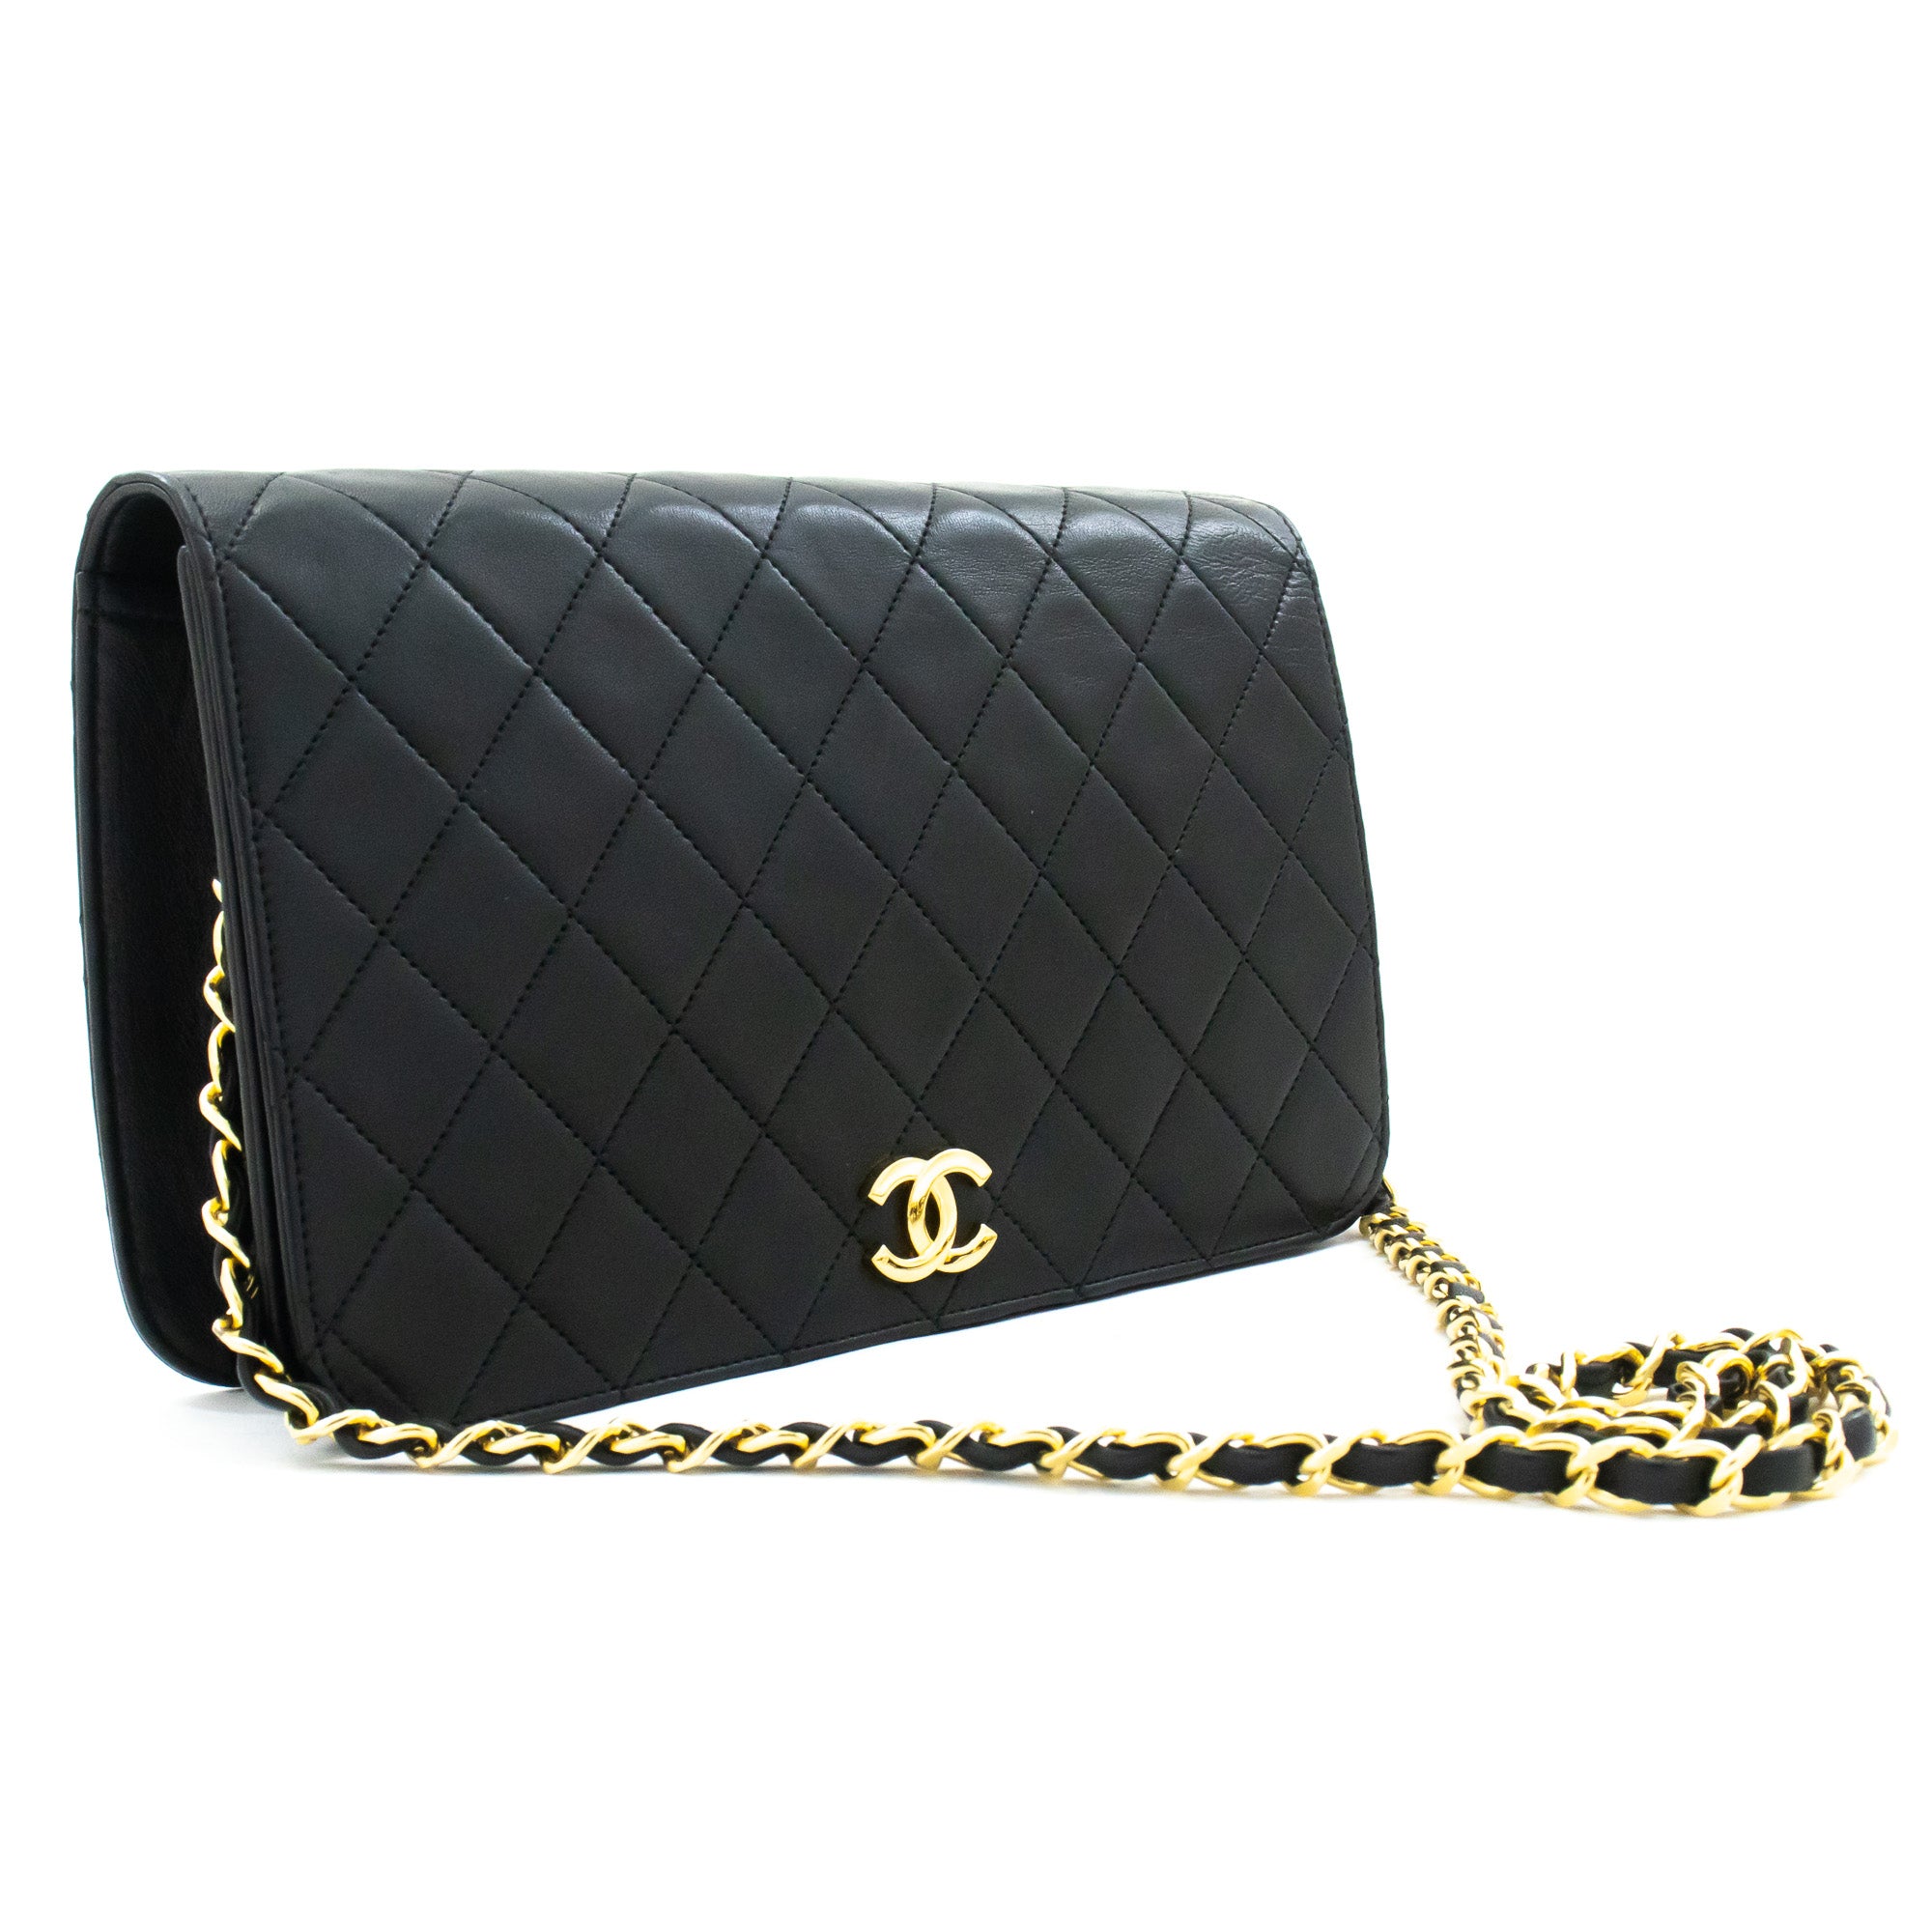 CHANEL Argyle/Diamond Black Bags & Handbags for Women